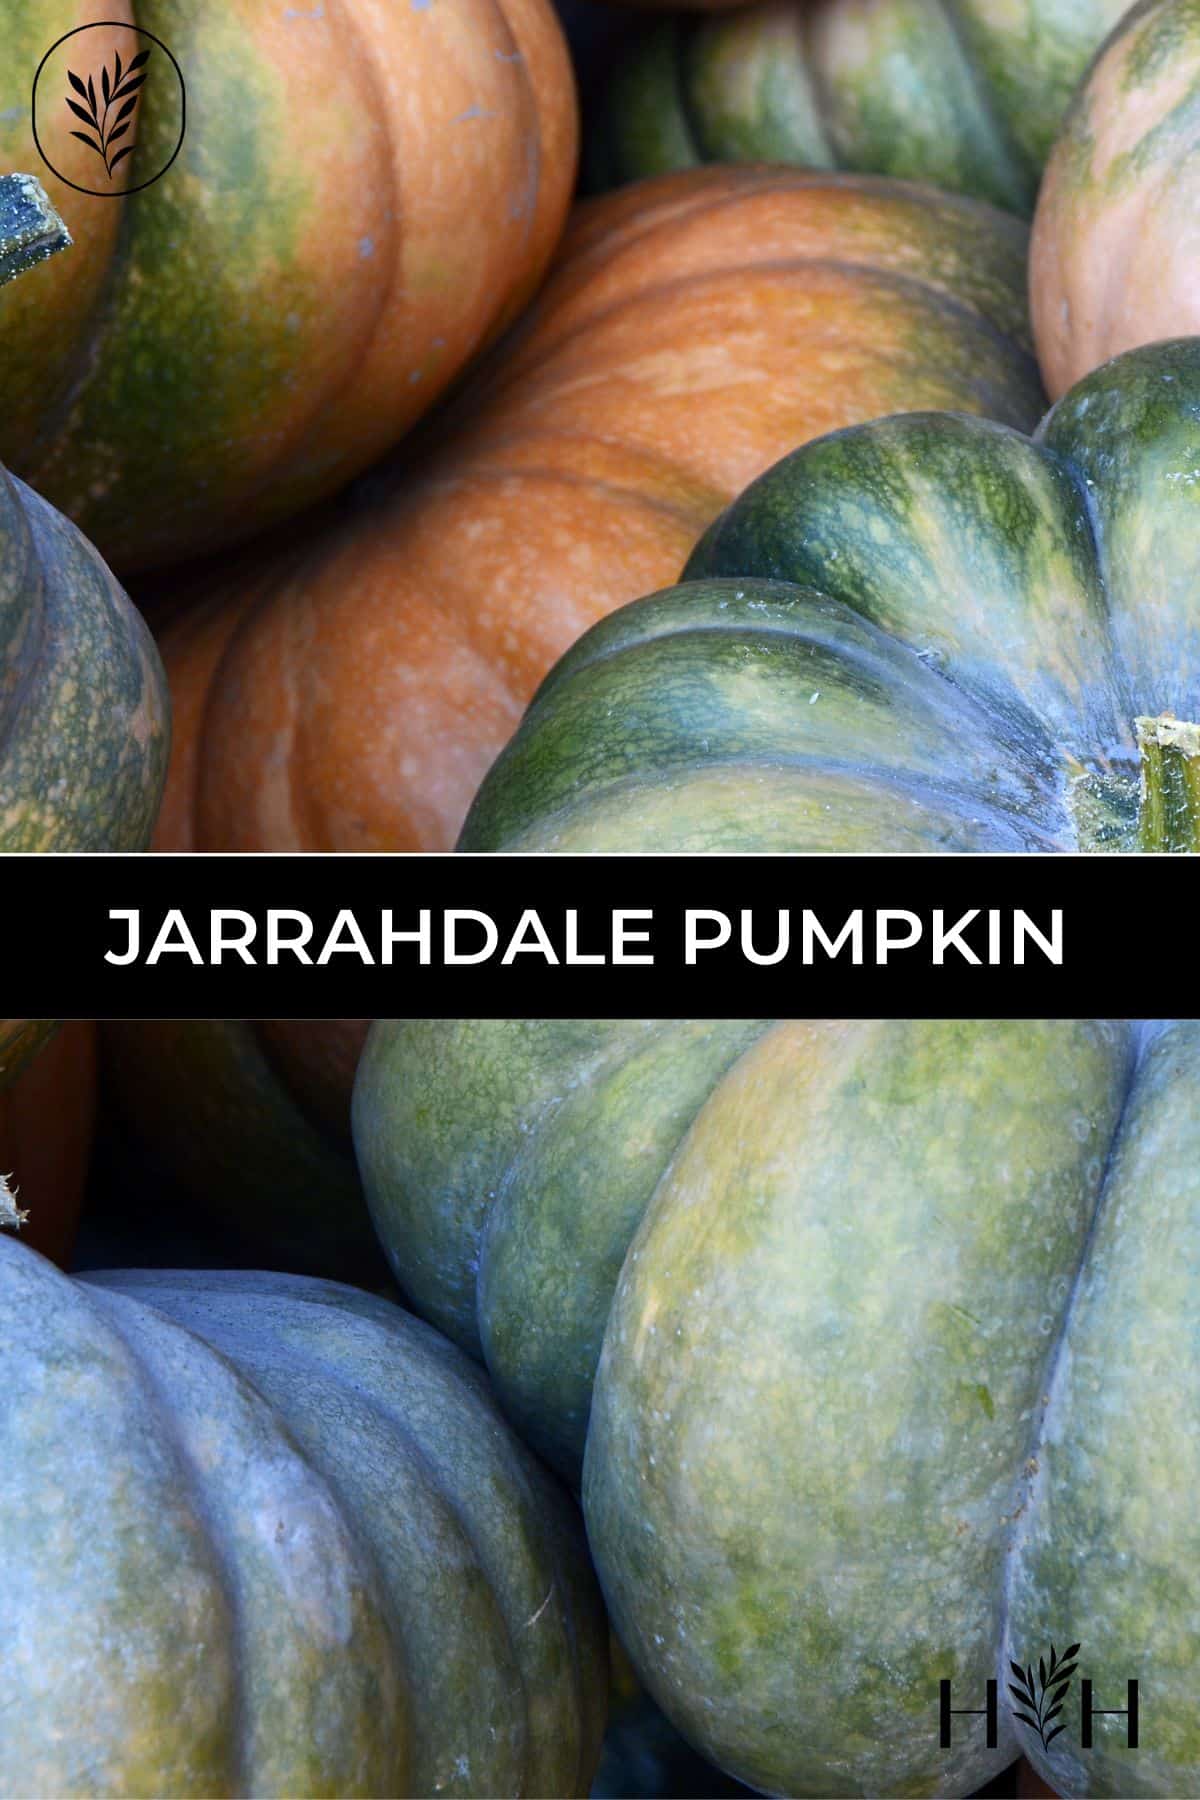 Jarrahdale pumpkin via @home4theharvest